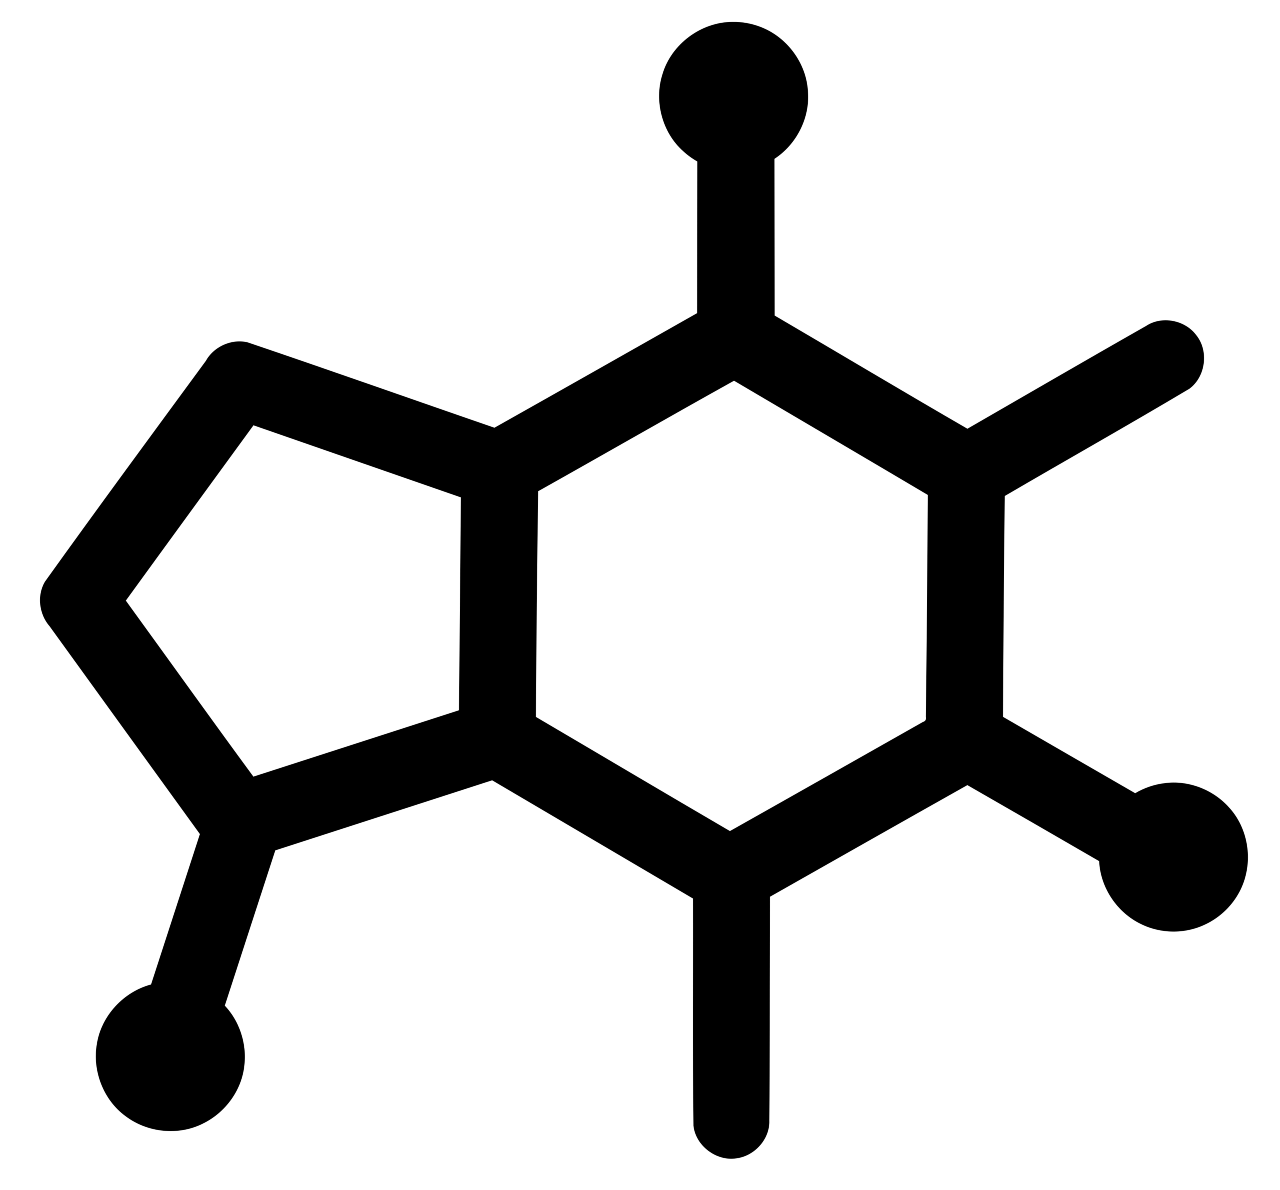 simplified diagram of the caffeine molecule